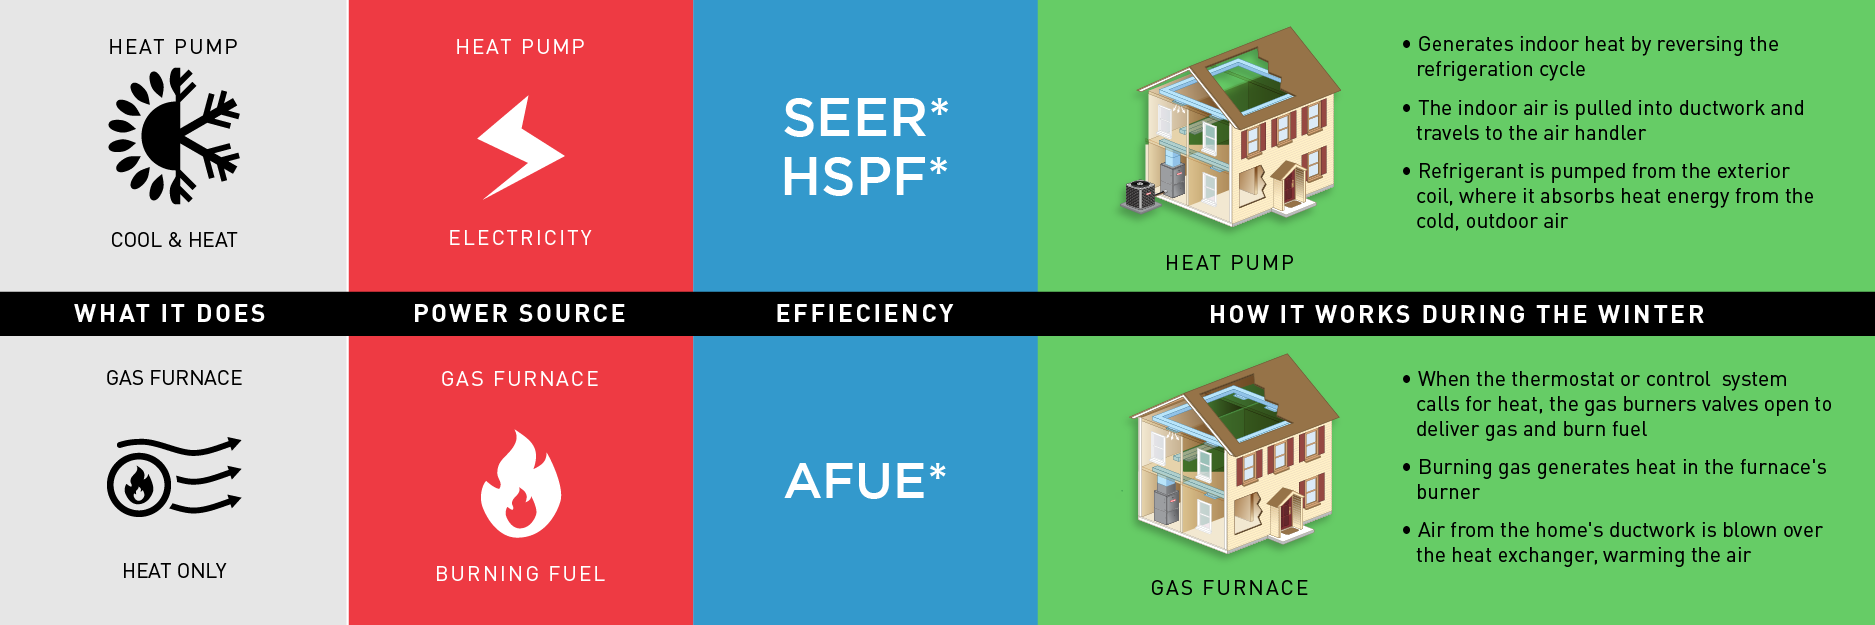 Heat Pump and Gas Furnace Comparison